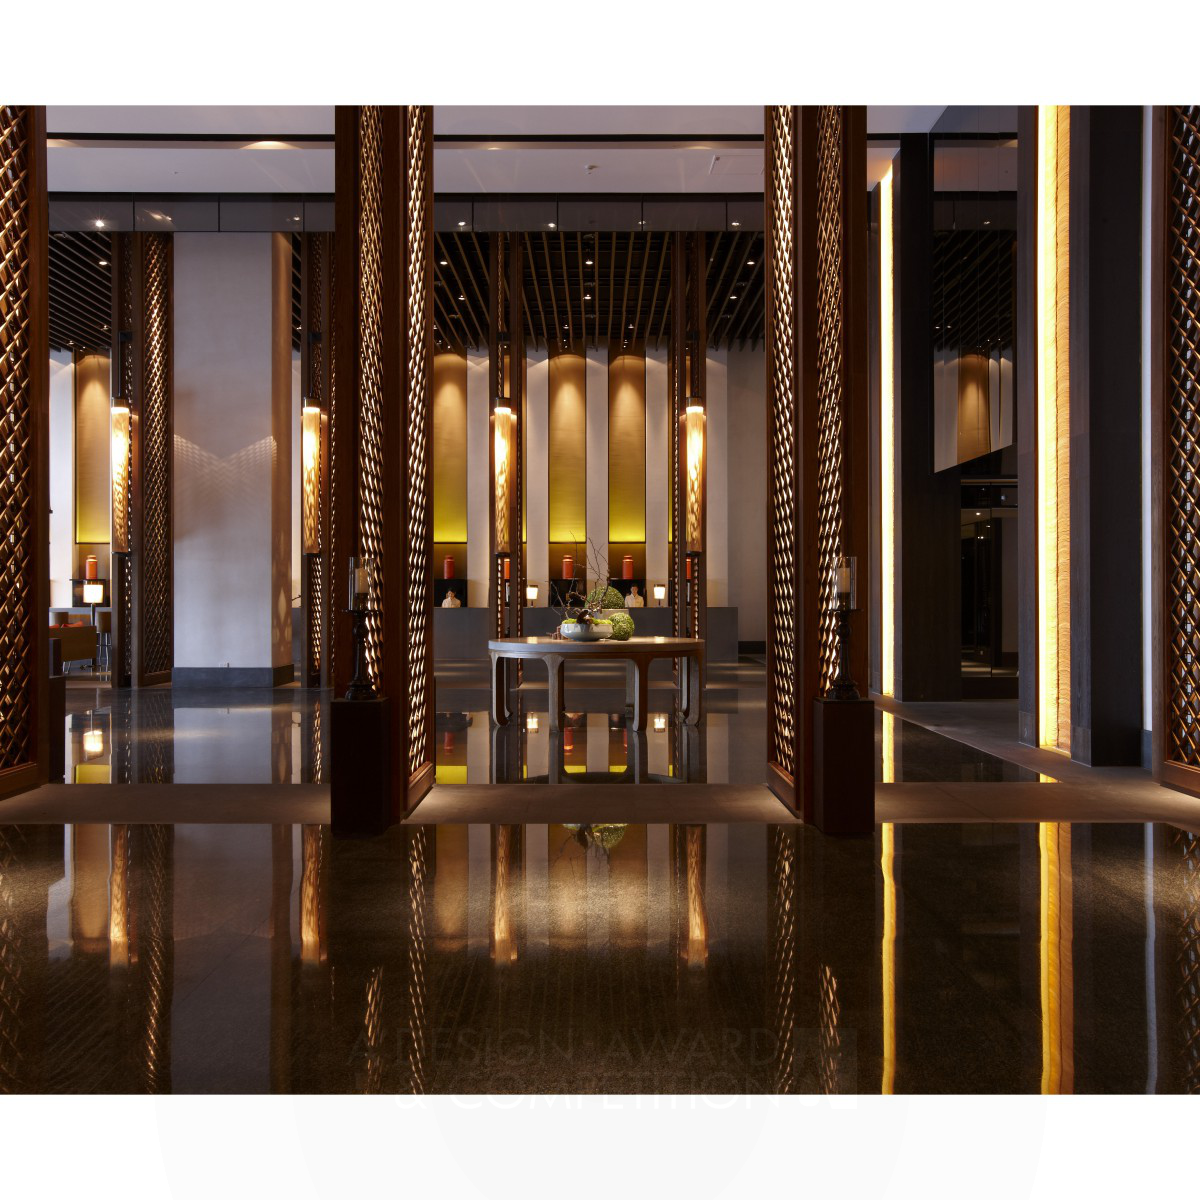 Silks Place Hotel Tainan by RICH HONOUR INTERNATIONAL DESIGNS LTD.